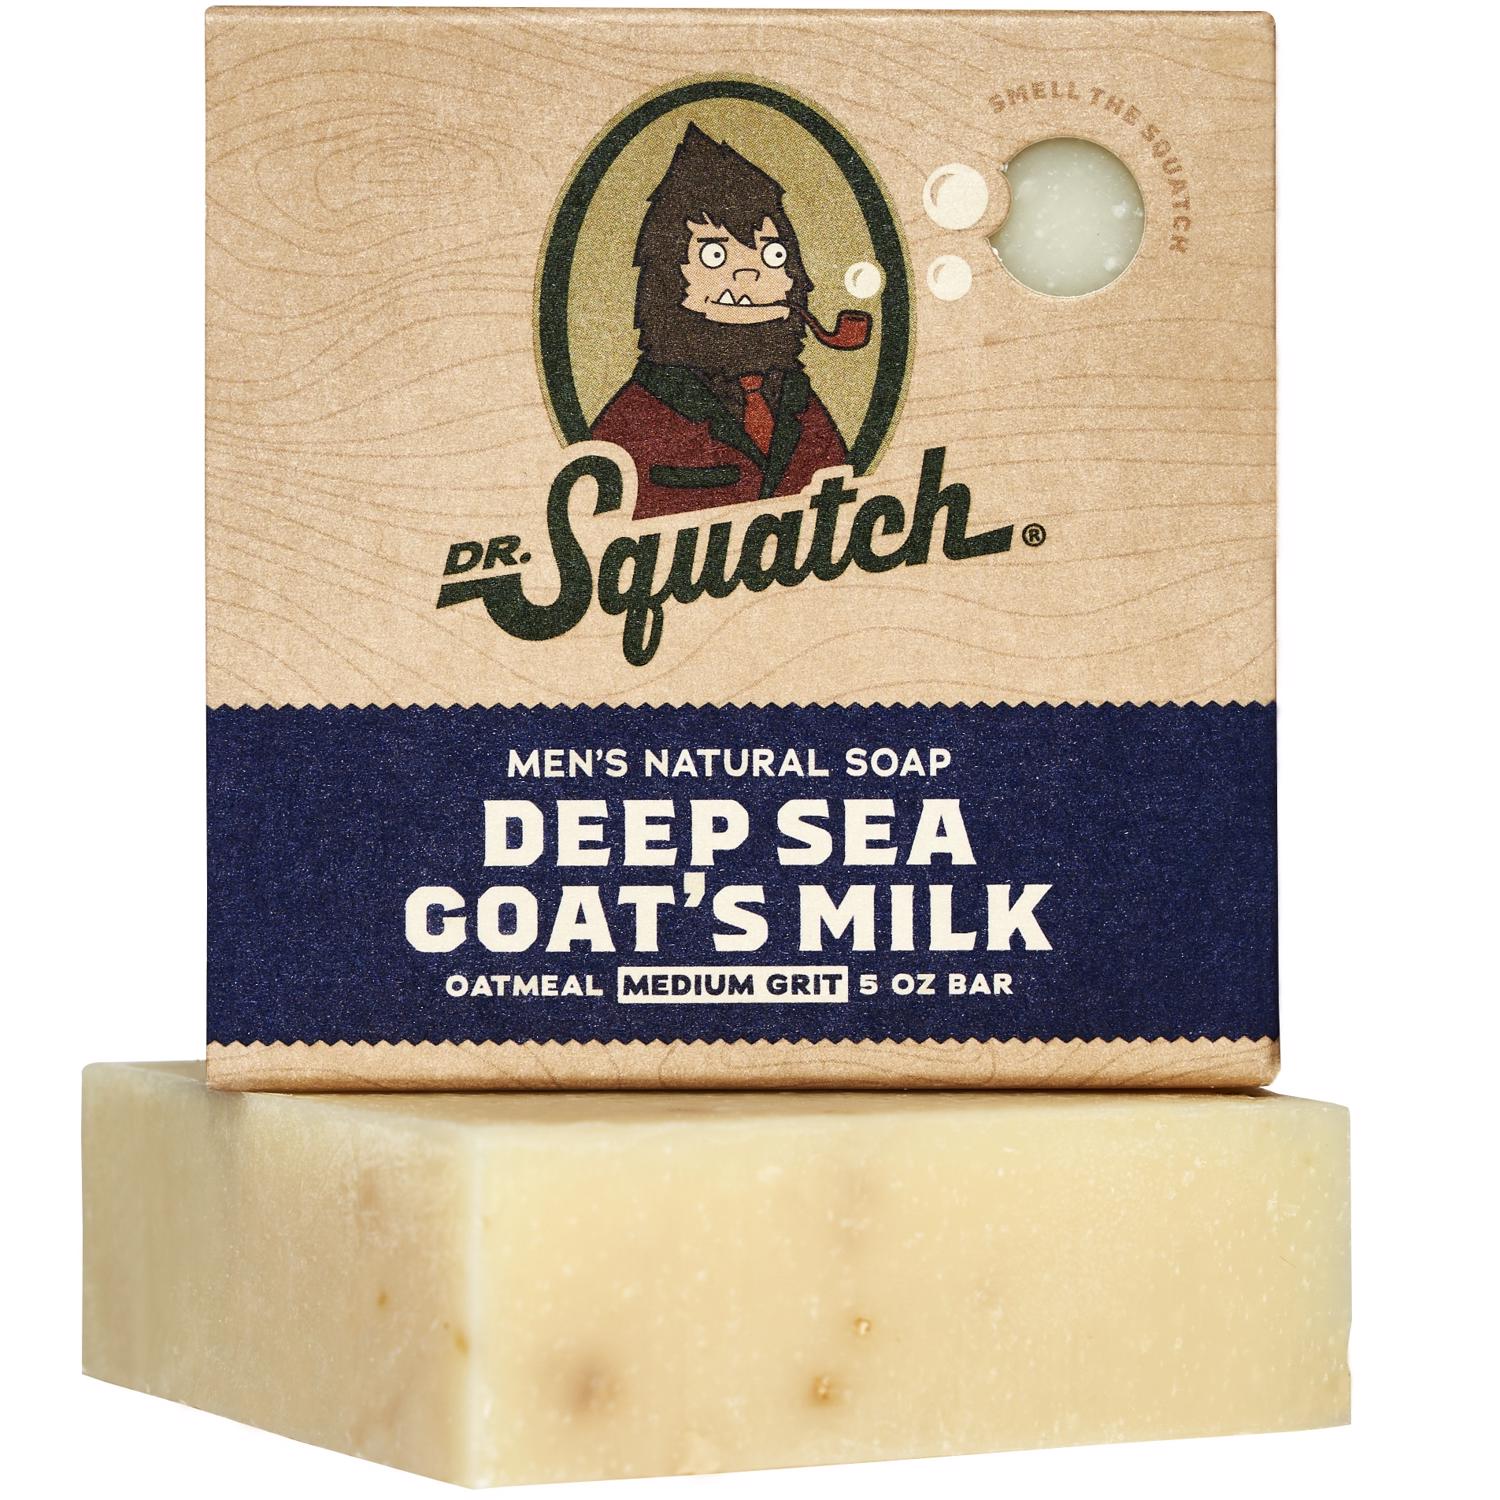 Dr Squatch Birchwood Breeze Bar Soap